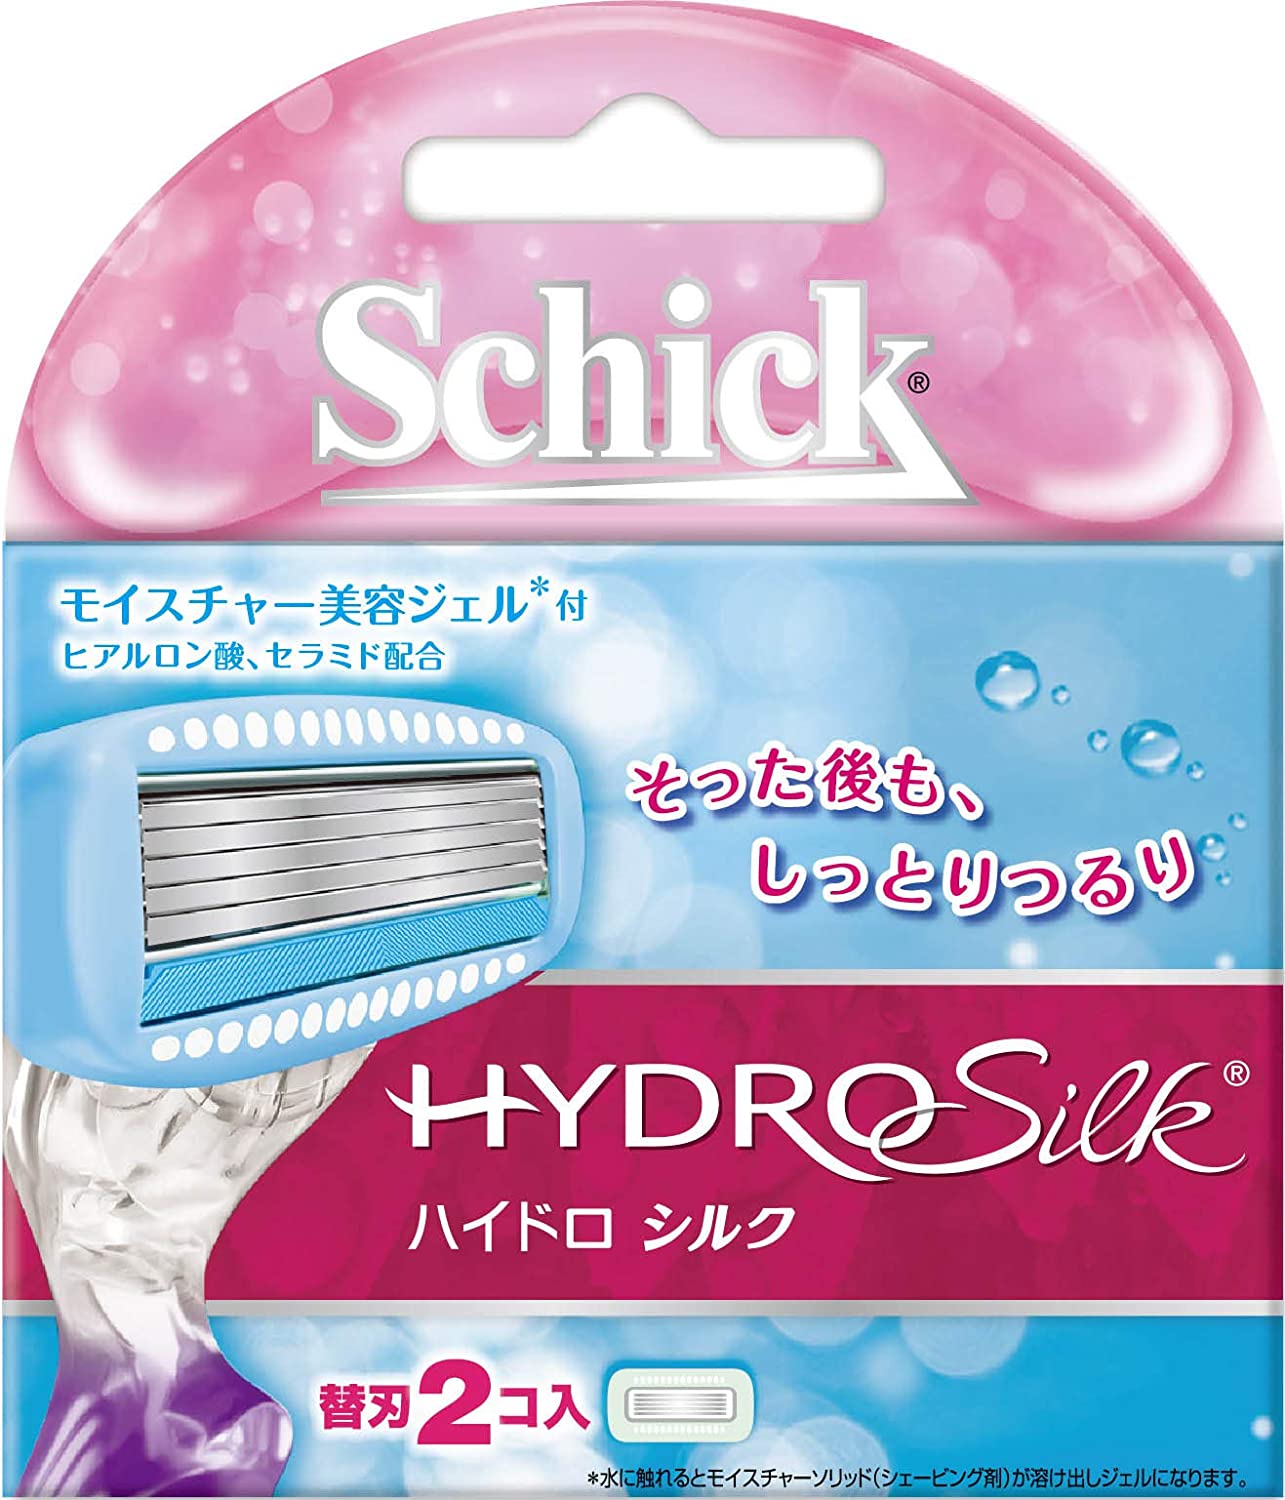 Schick Hydro Silk Replacement Razor Blades, 2 Pack - buy online